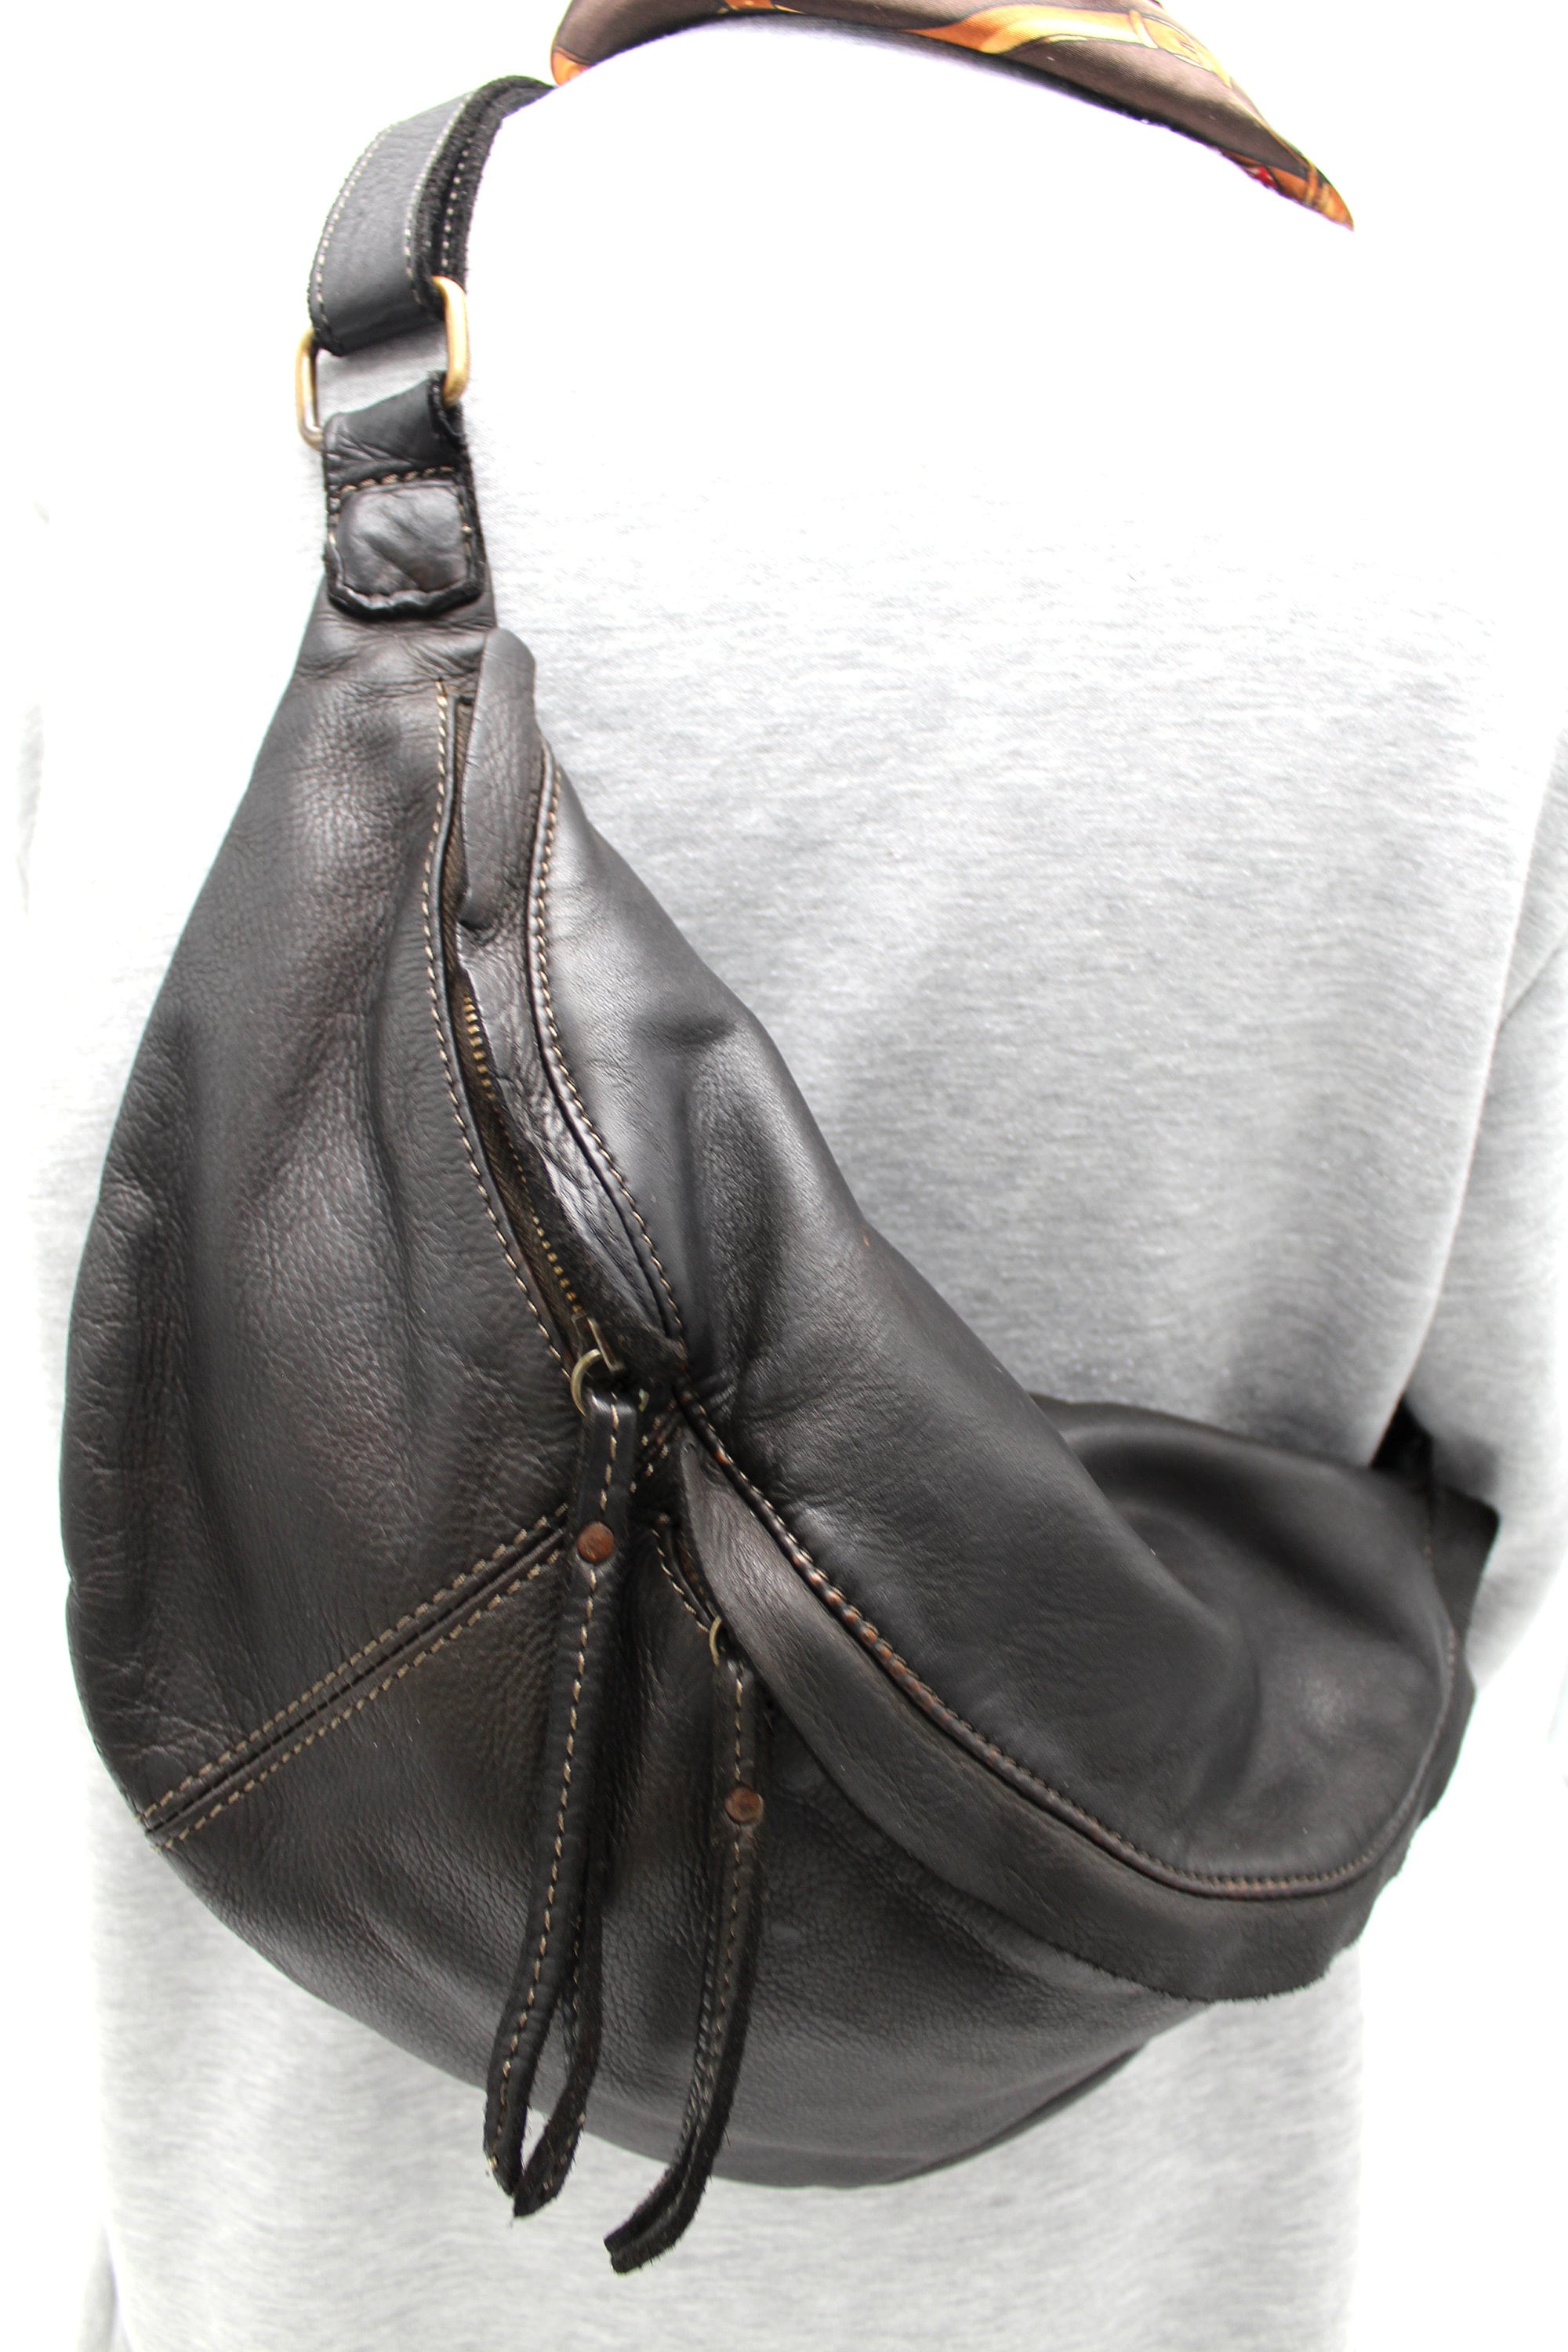 Womens Leather Sling Bag, HealthdesignShops